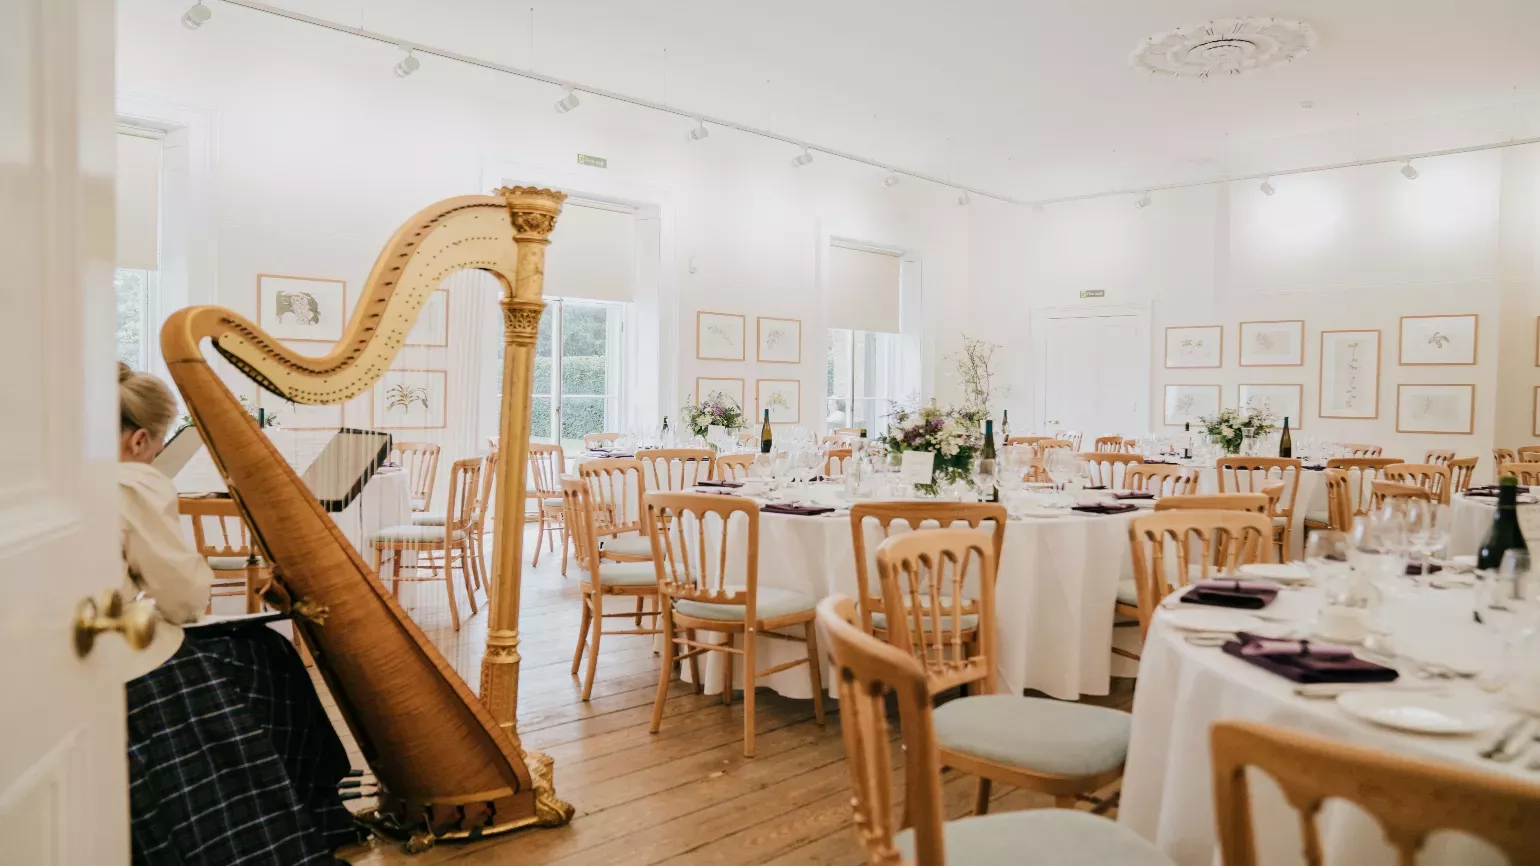 A harpist in a wedding dinner hall